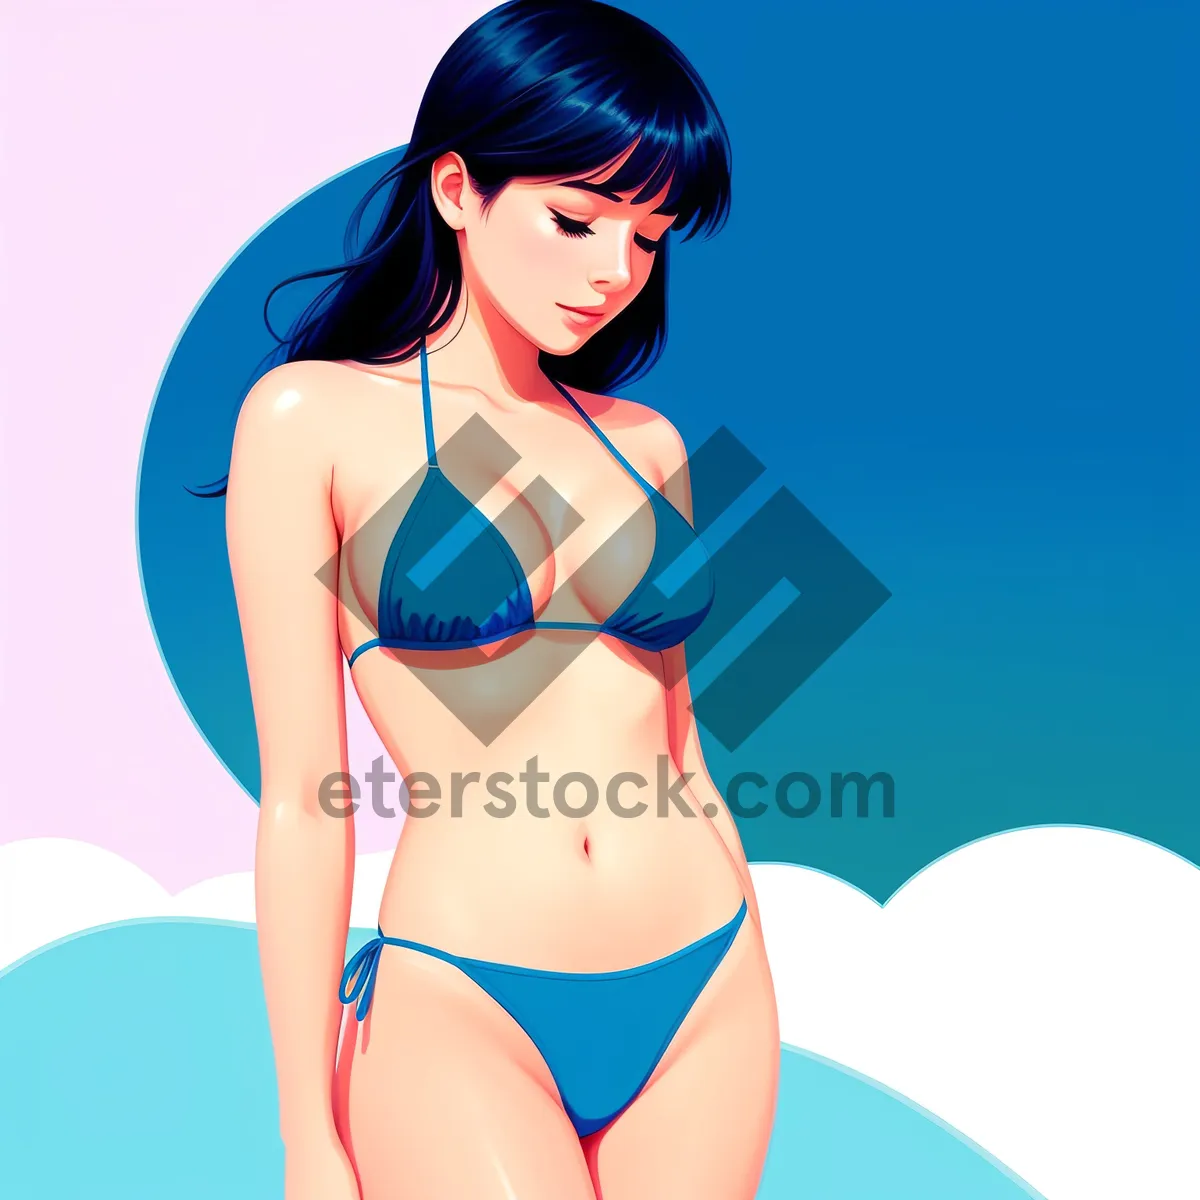 Picture of Sultry Poolside Fashion - Bikini Model Soaking Up the Fun